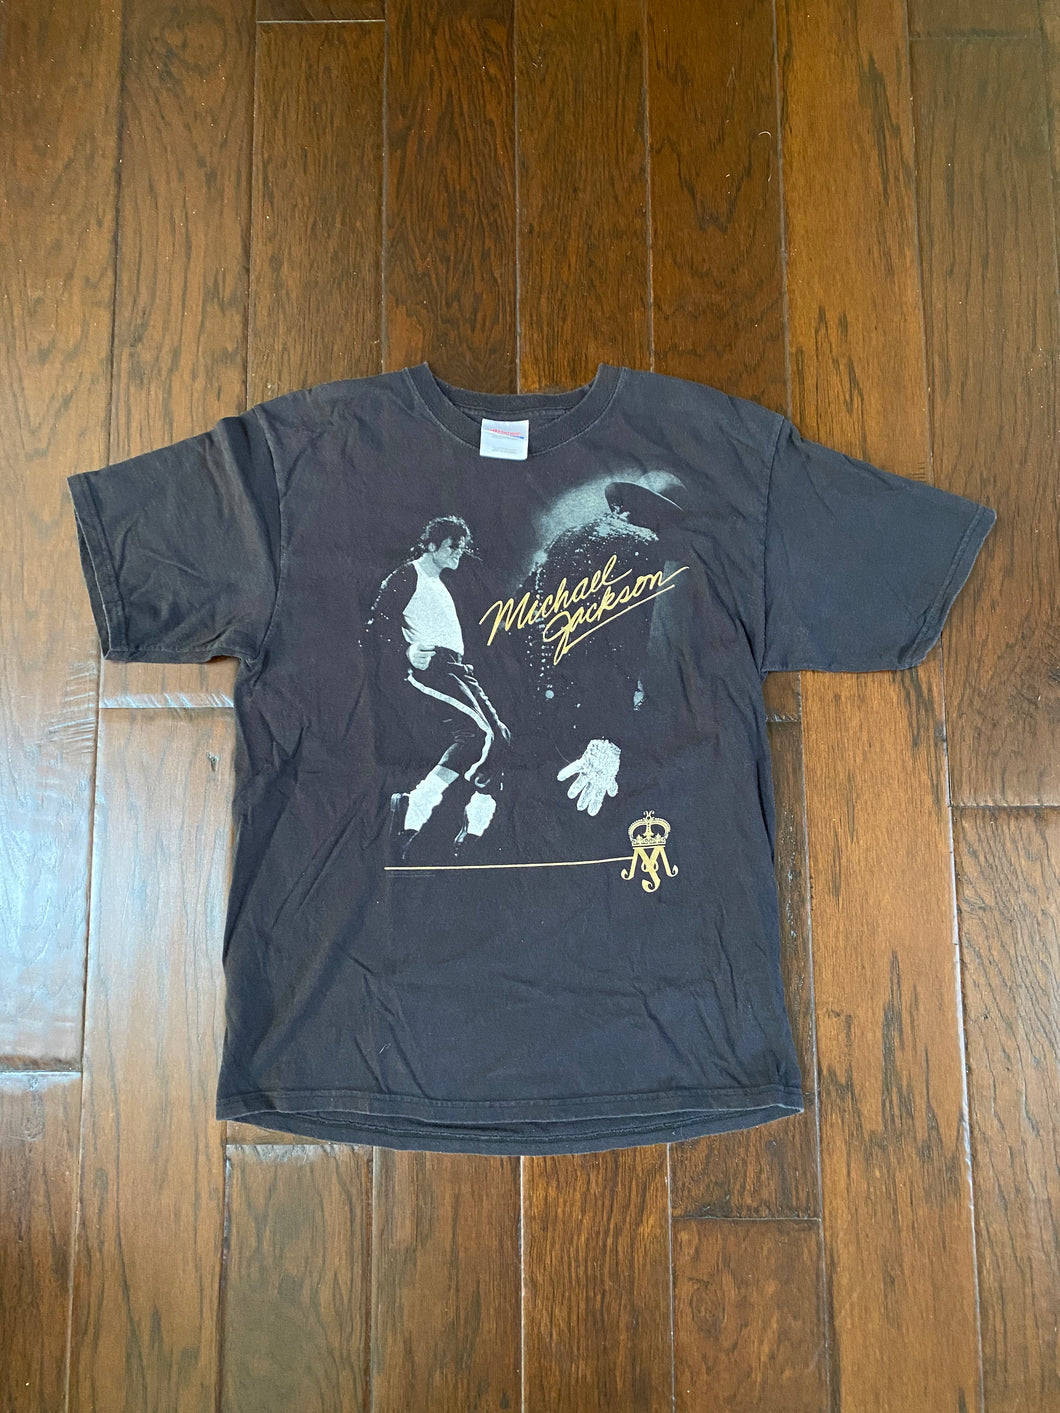 Michael Jackson 2008 Vintage Distressed T-shirt